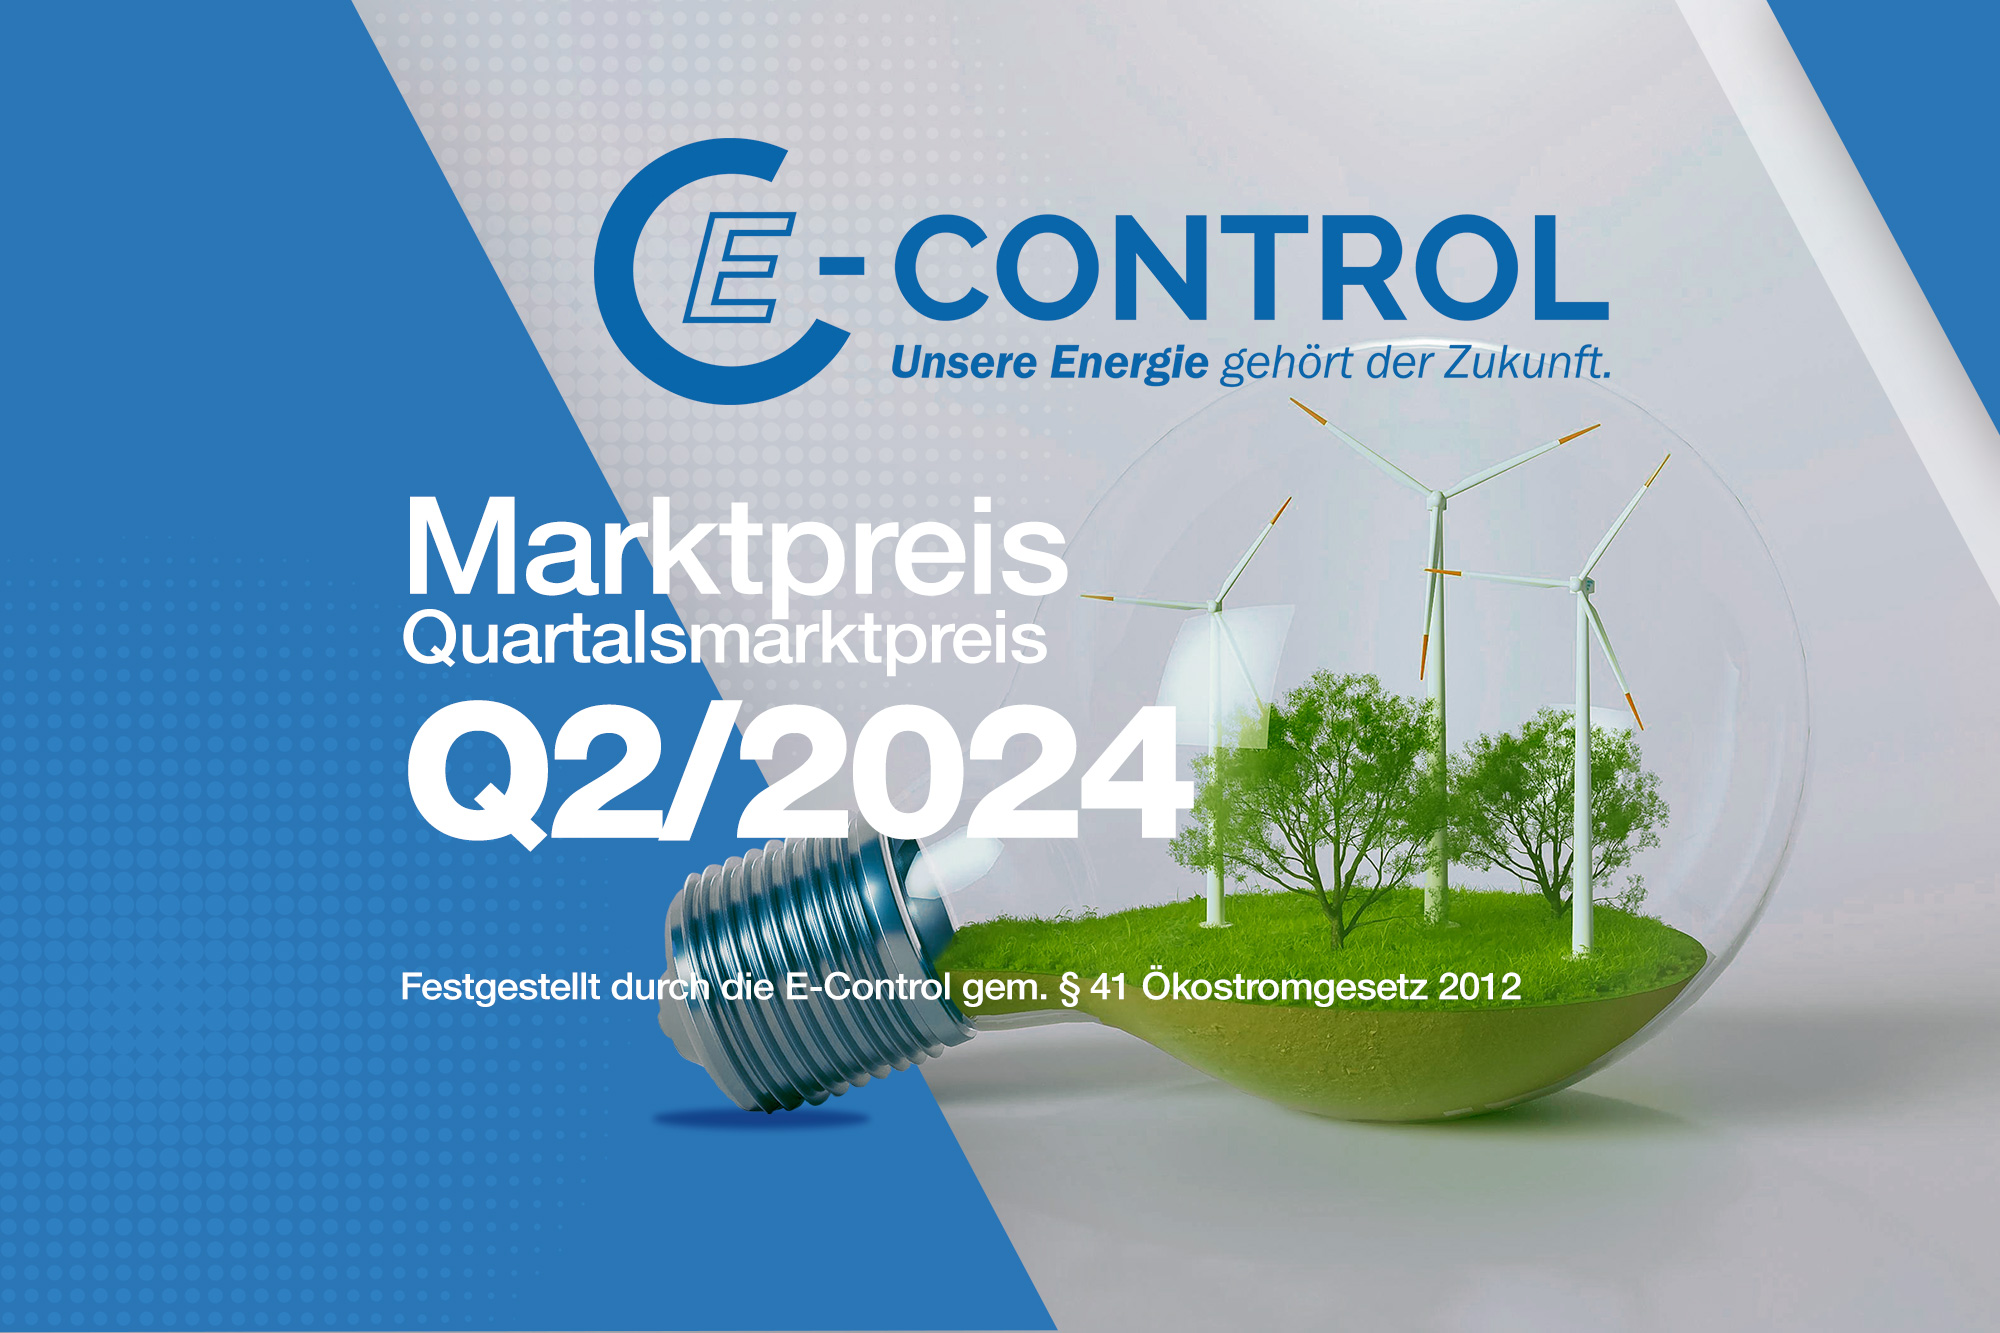 E-Control Marktpreis Q2/2024: 7,76 ct/kWh